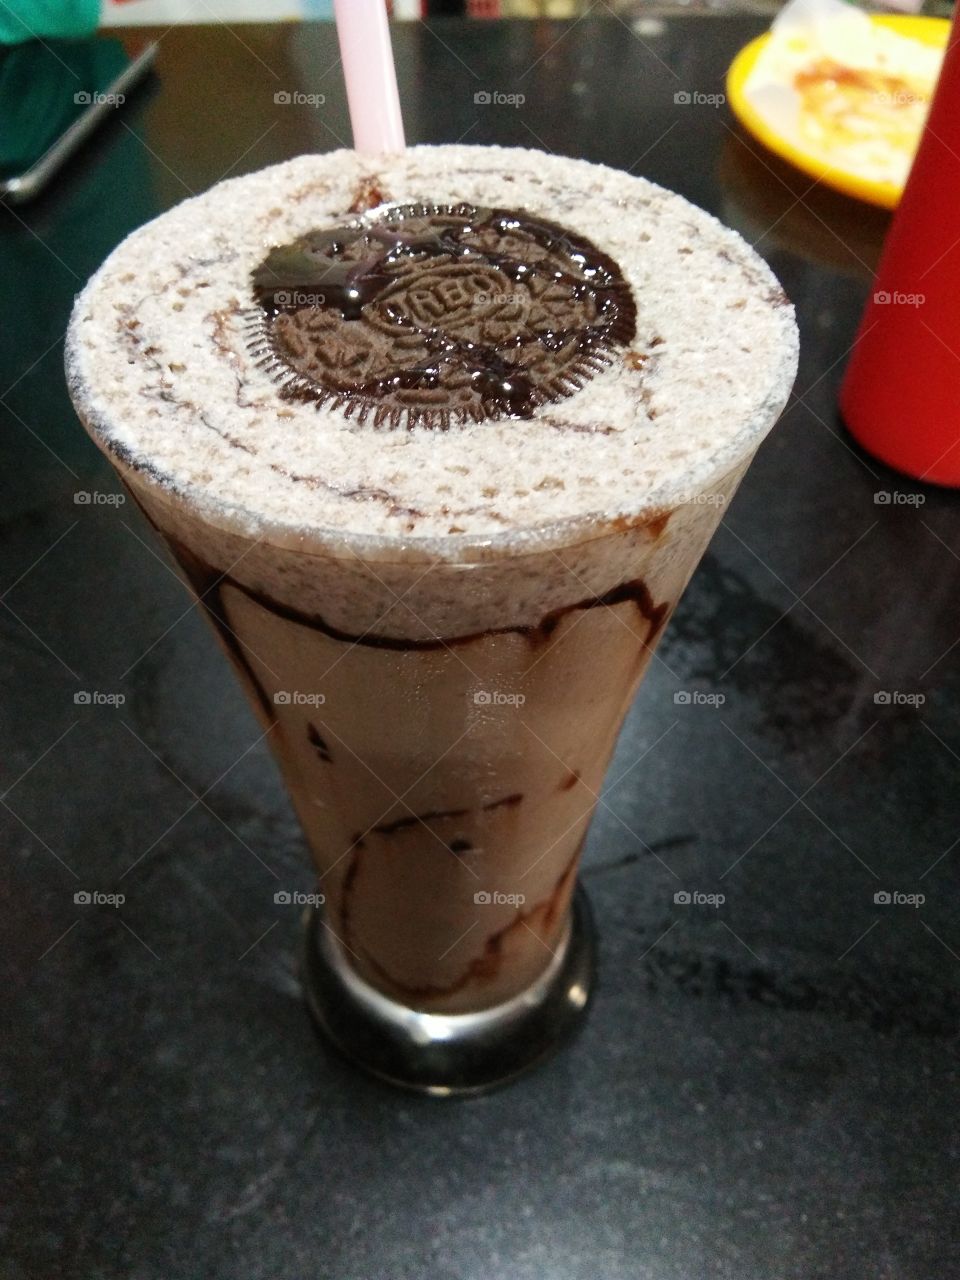 Oreo milkshake 🍪 🍪